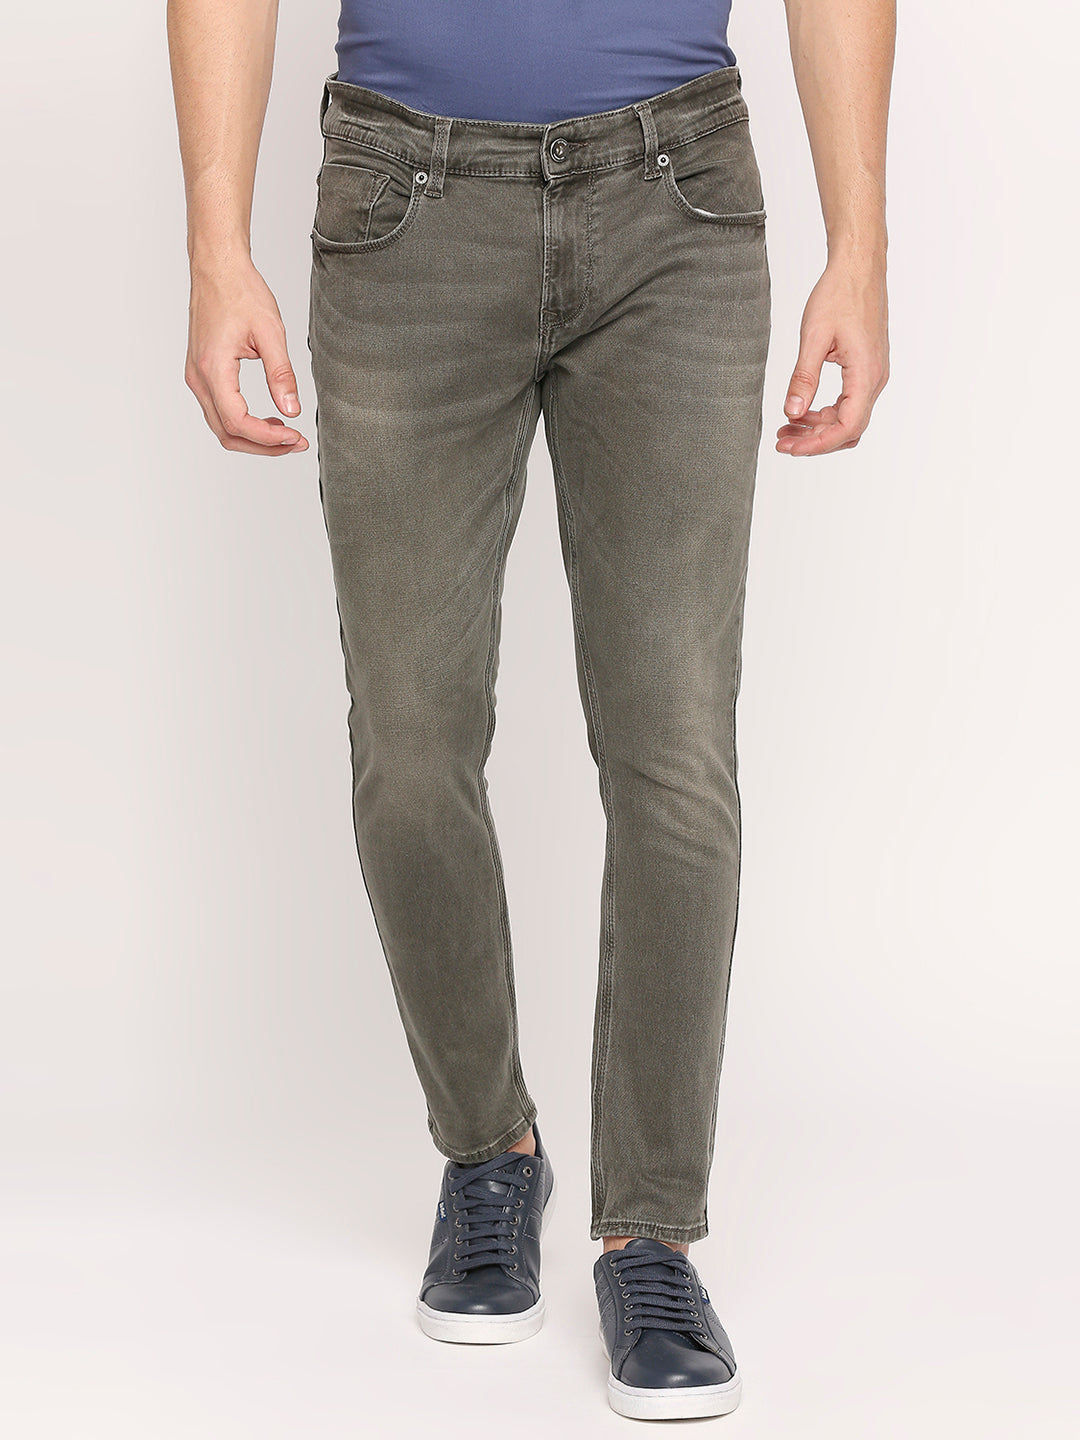 Spykar Light Olive Cotton Slim Fit Tapered Length Jeans For Men (Kano)